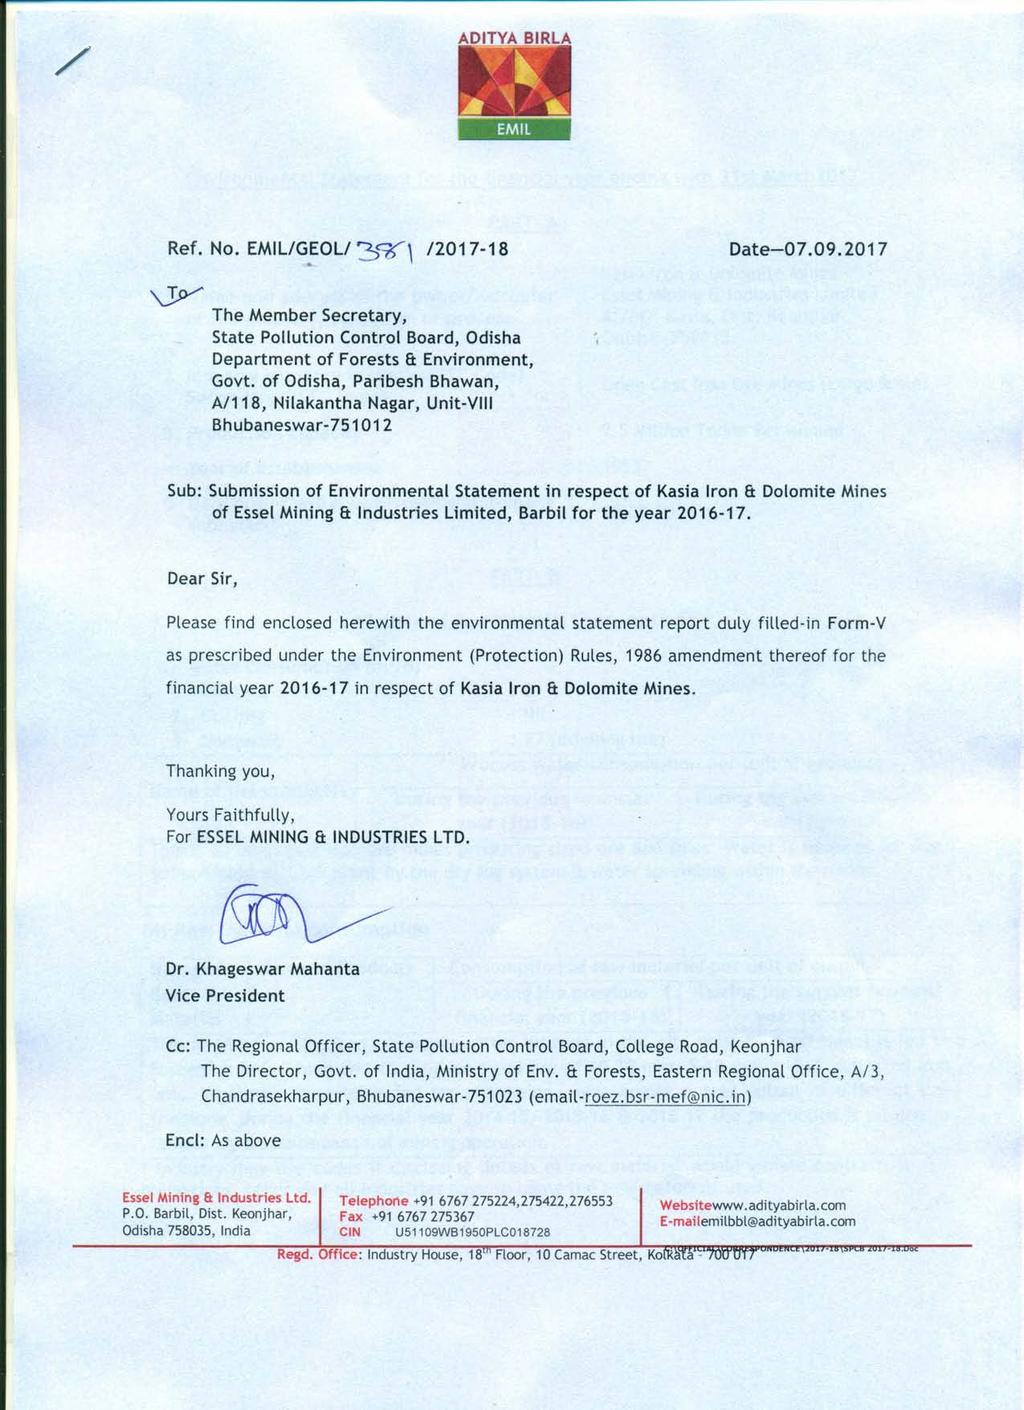 / ADITYA BIRLA EMil Ref. No. EMILIGEOLI '35, 12017-18 Date-07.09.2017 0V The Member Secretary, State Pollution Control Board, Odisha Department of Forests ft Environment, Govt.